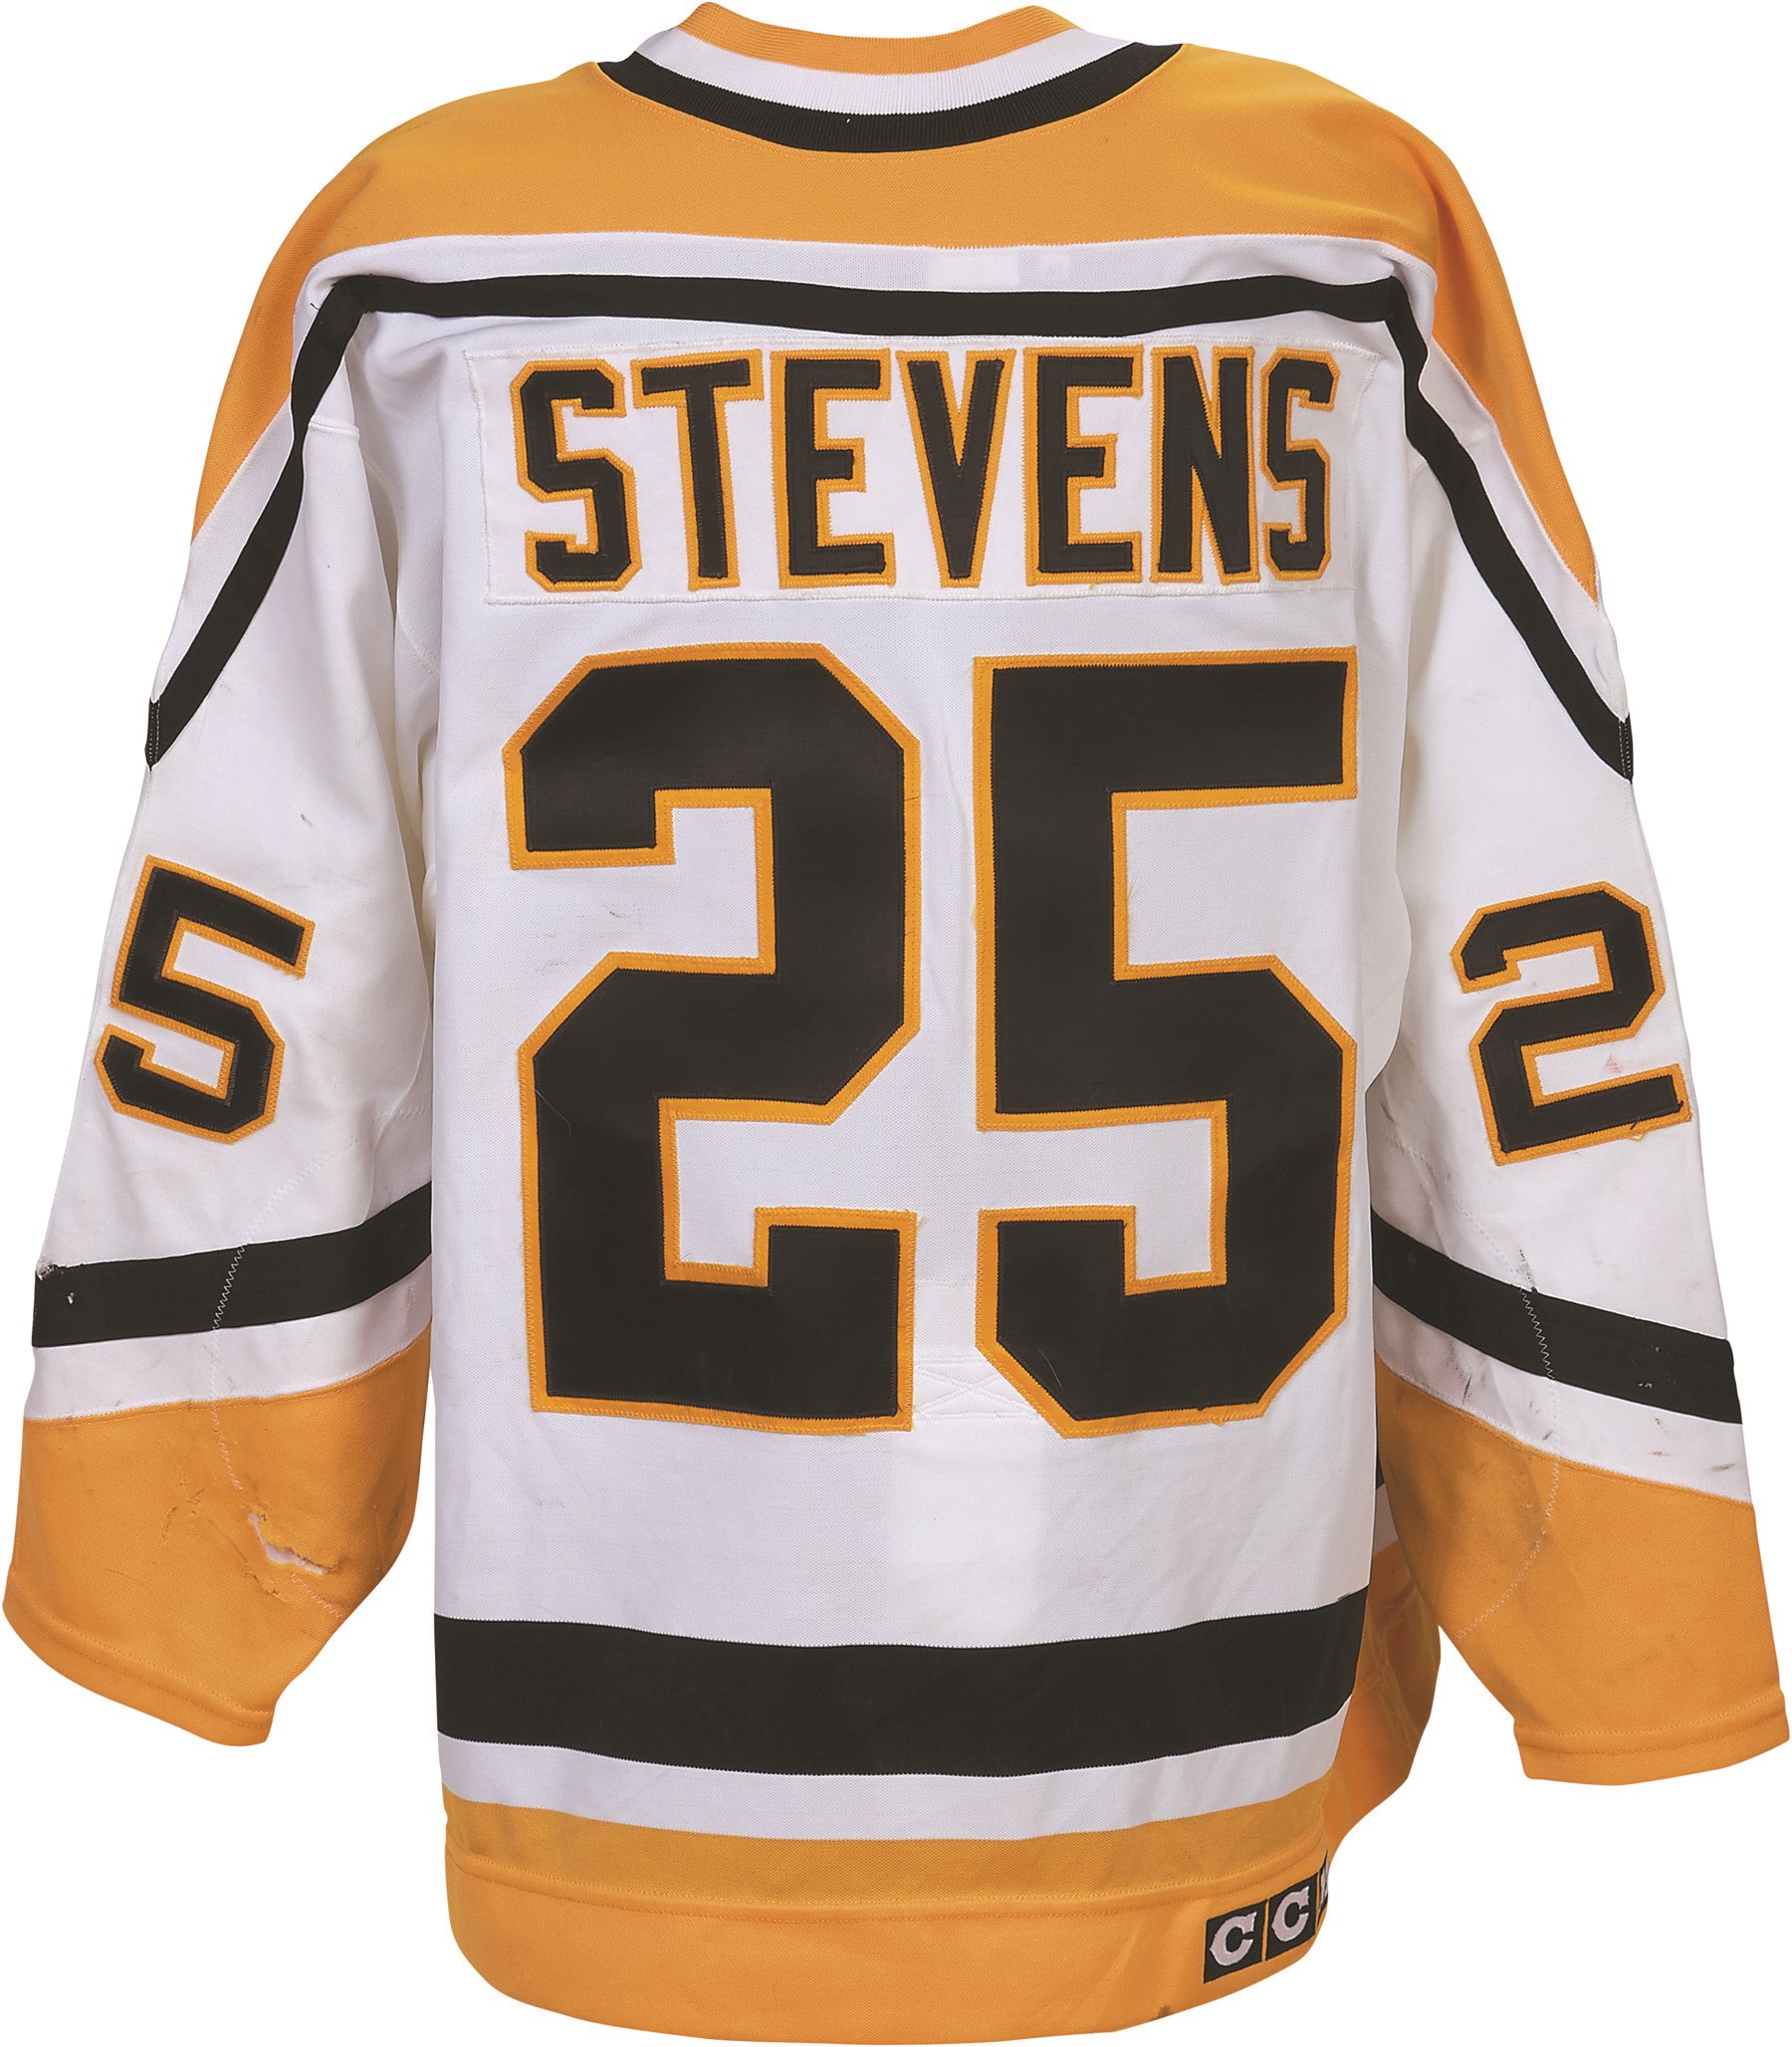 Hockey - 1992-93 Kevin Stevens Pittsburgh Penguins Game Worn Jersey